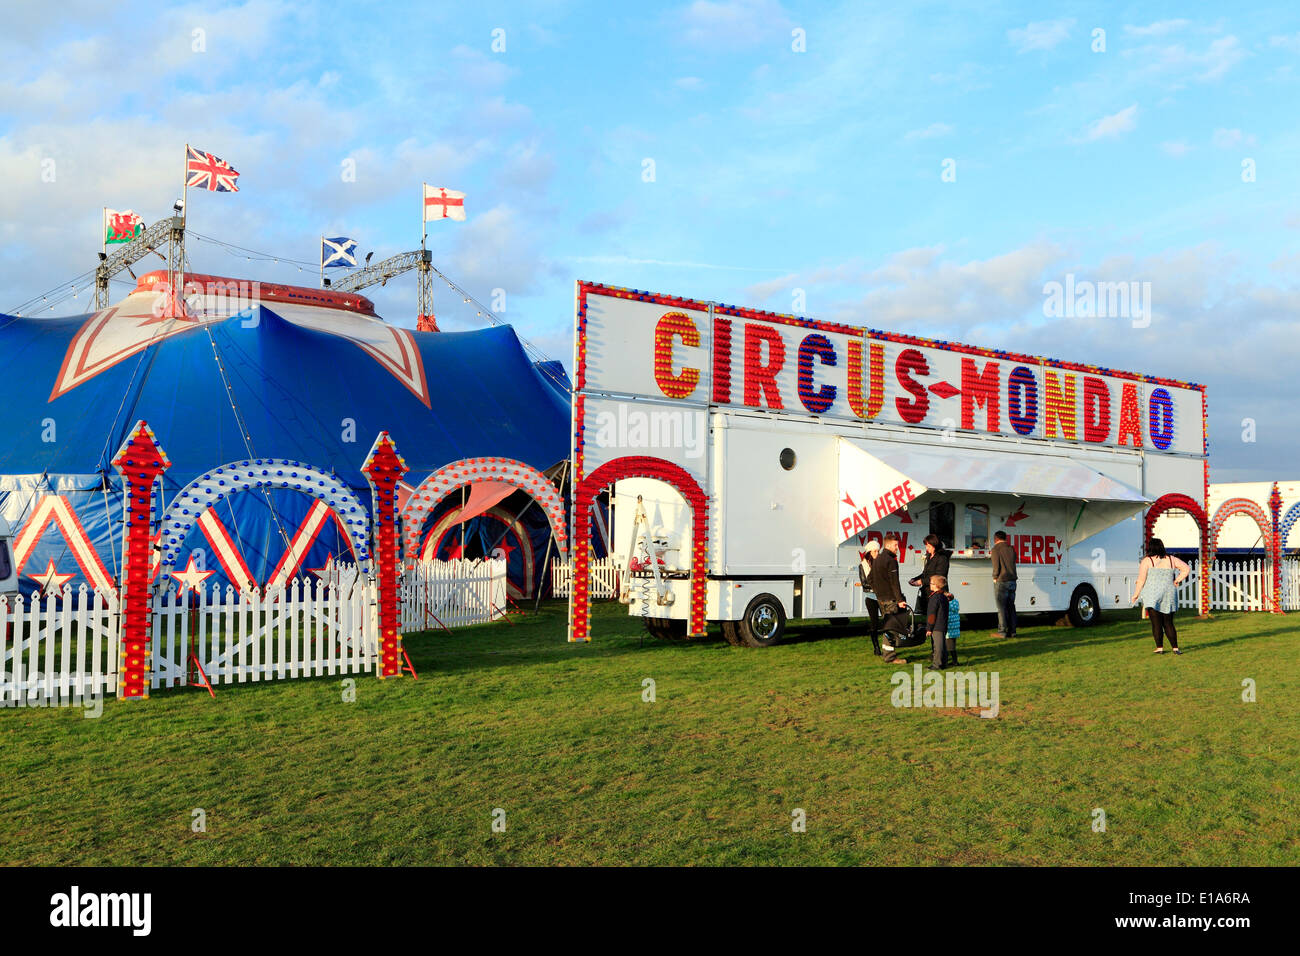 Circus Mondao, viaggiando UK circus show mostra Big Top Kings Lynn Inghilterra Foto Stock